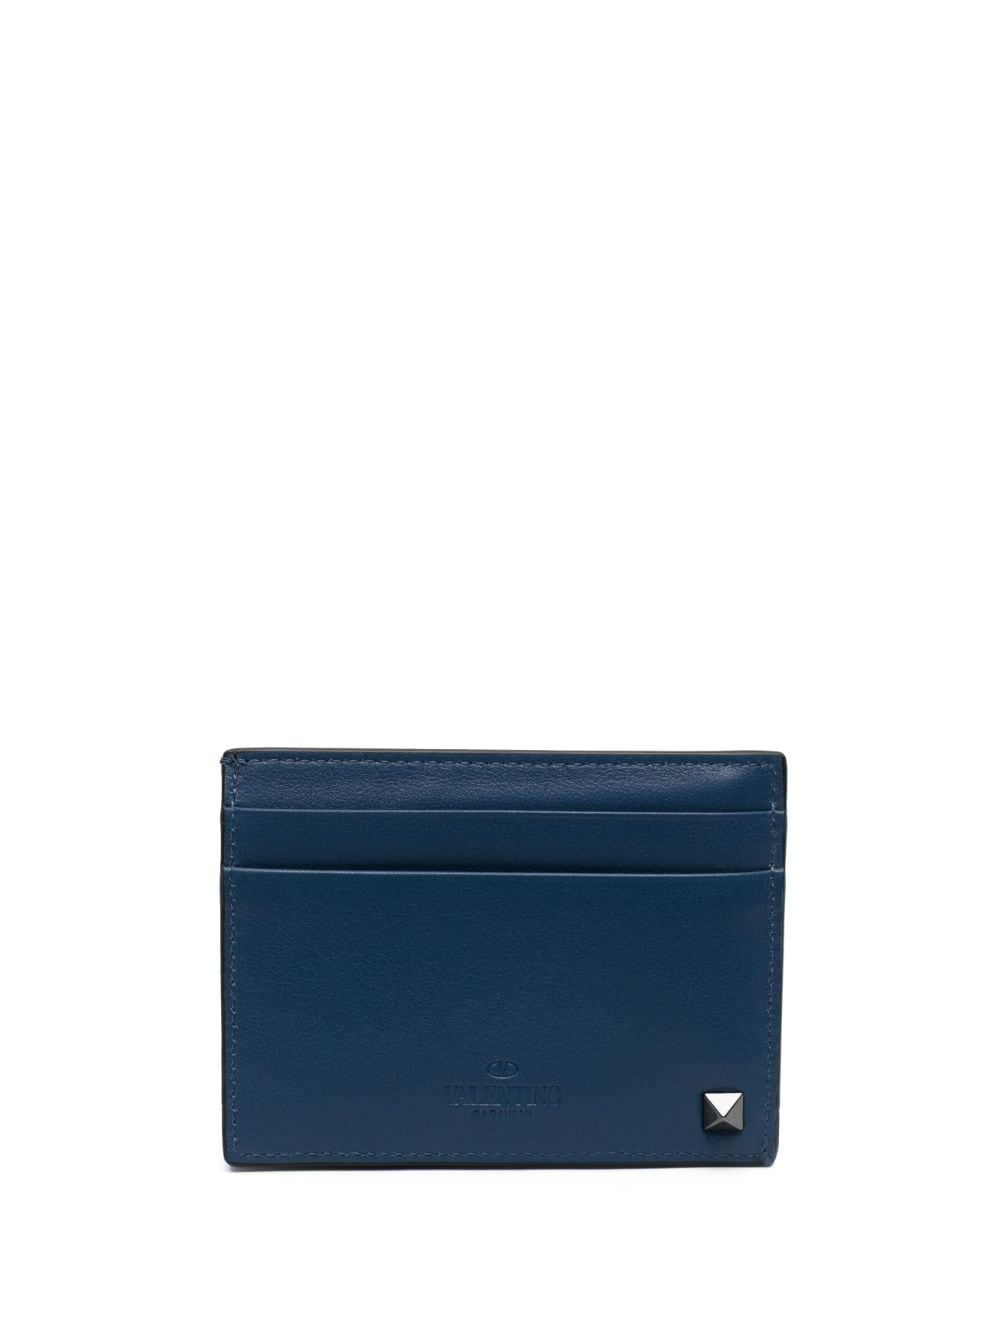 Valentino Garavani Rockstud leather card holder - Blauw